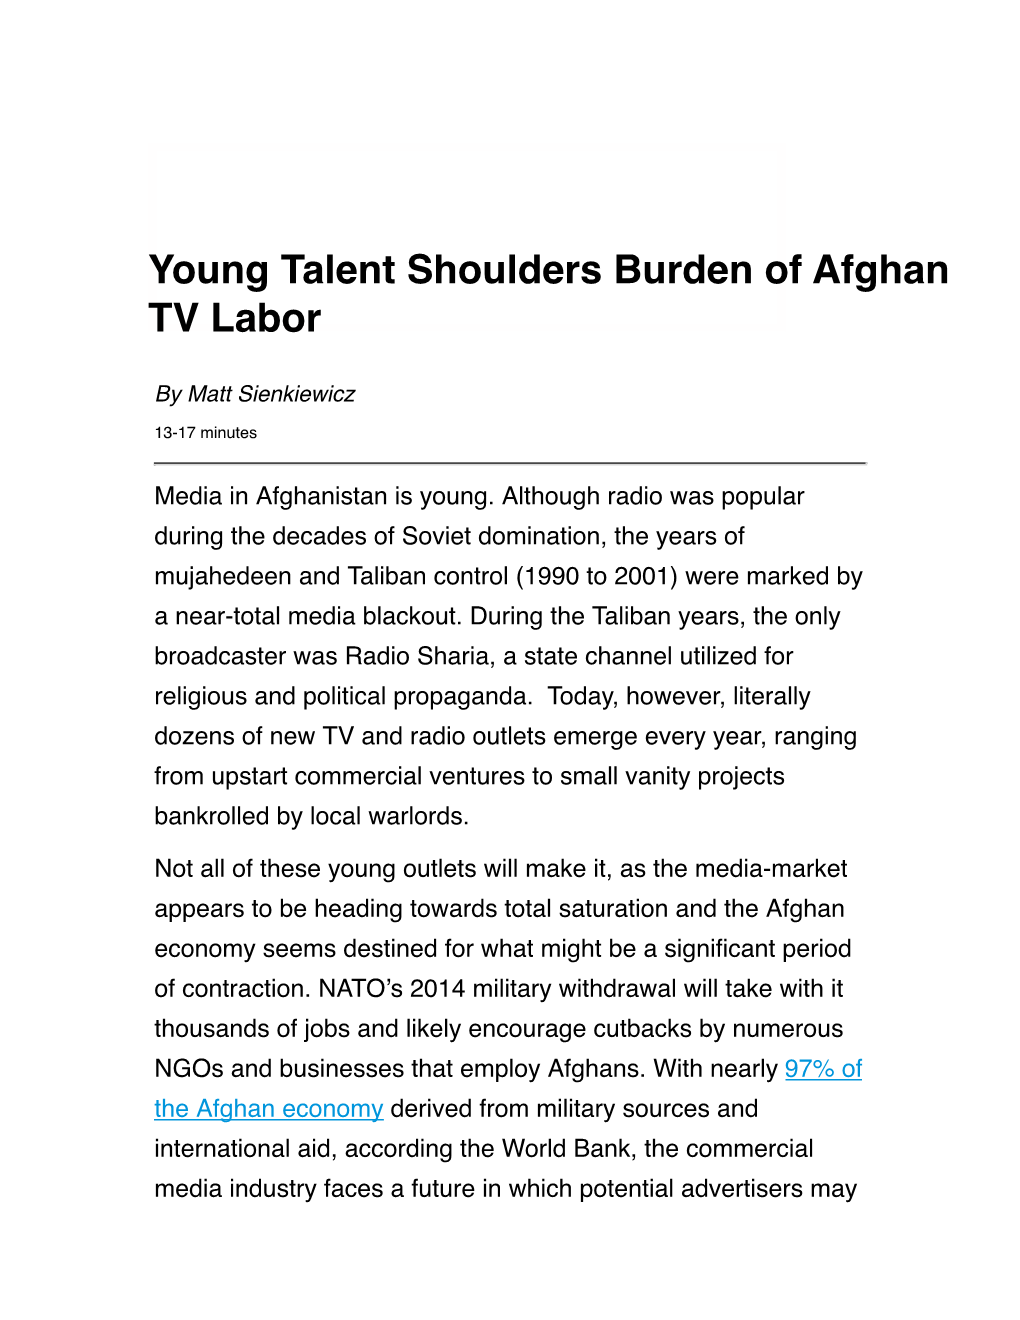 Young Talent Shoulders Burden of Afghan TV